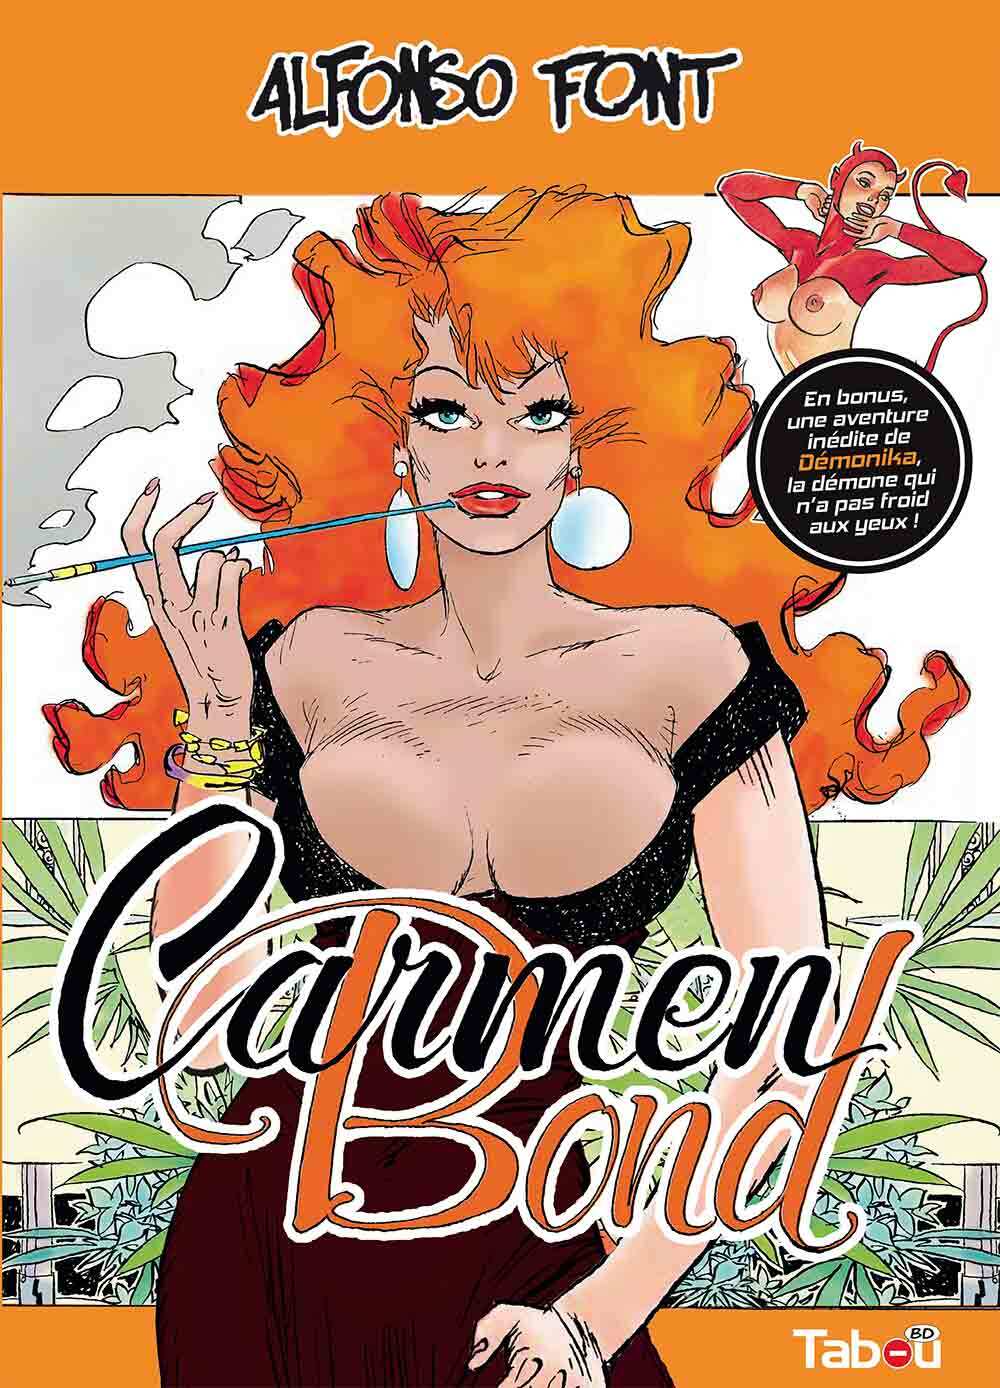 Book Carmen Bond FONT